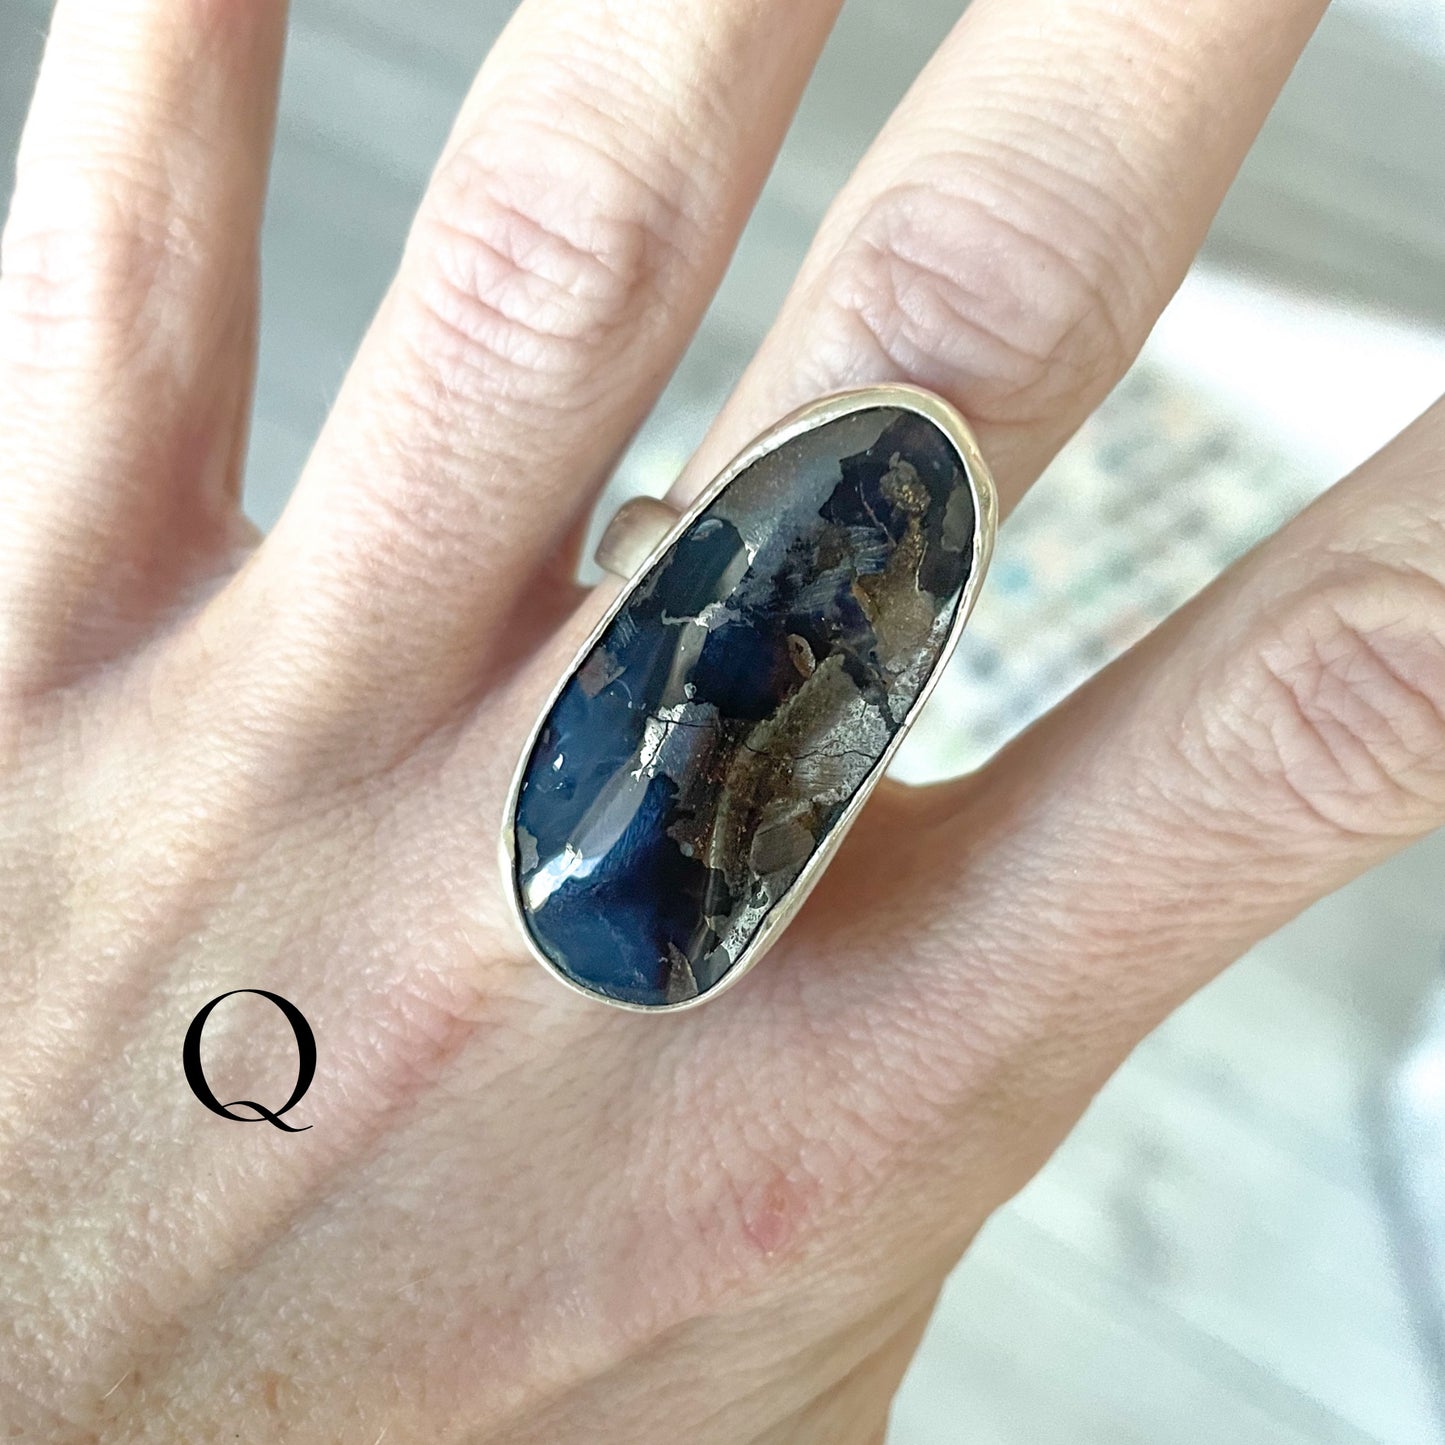 Boulder Opal Ring - Solid Sterling Silver